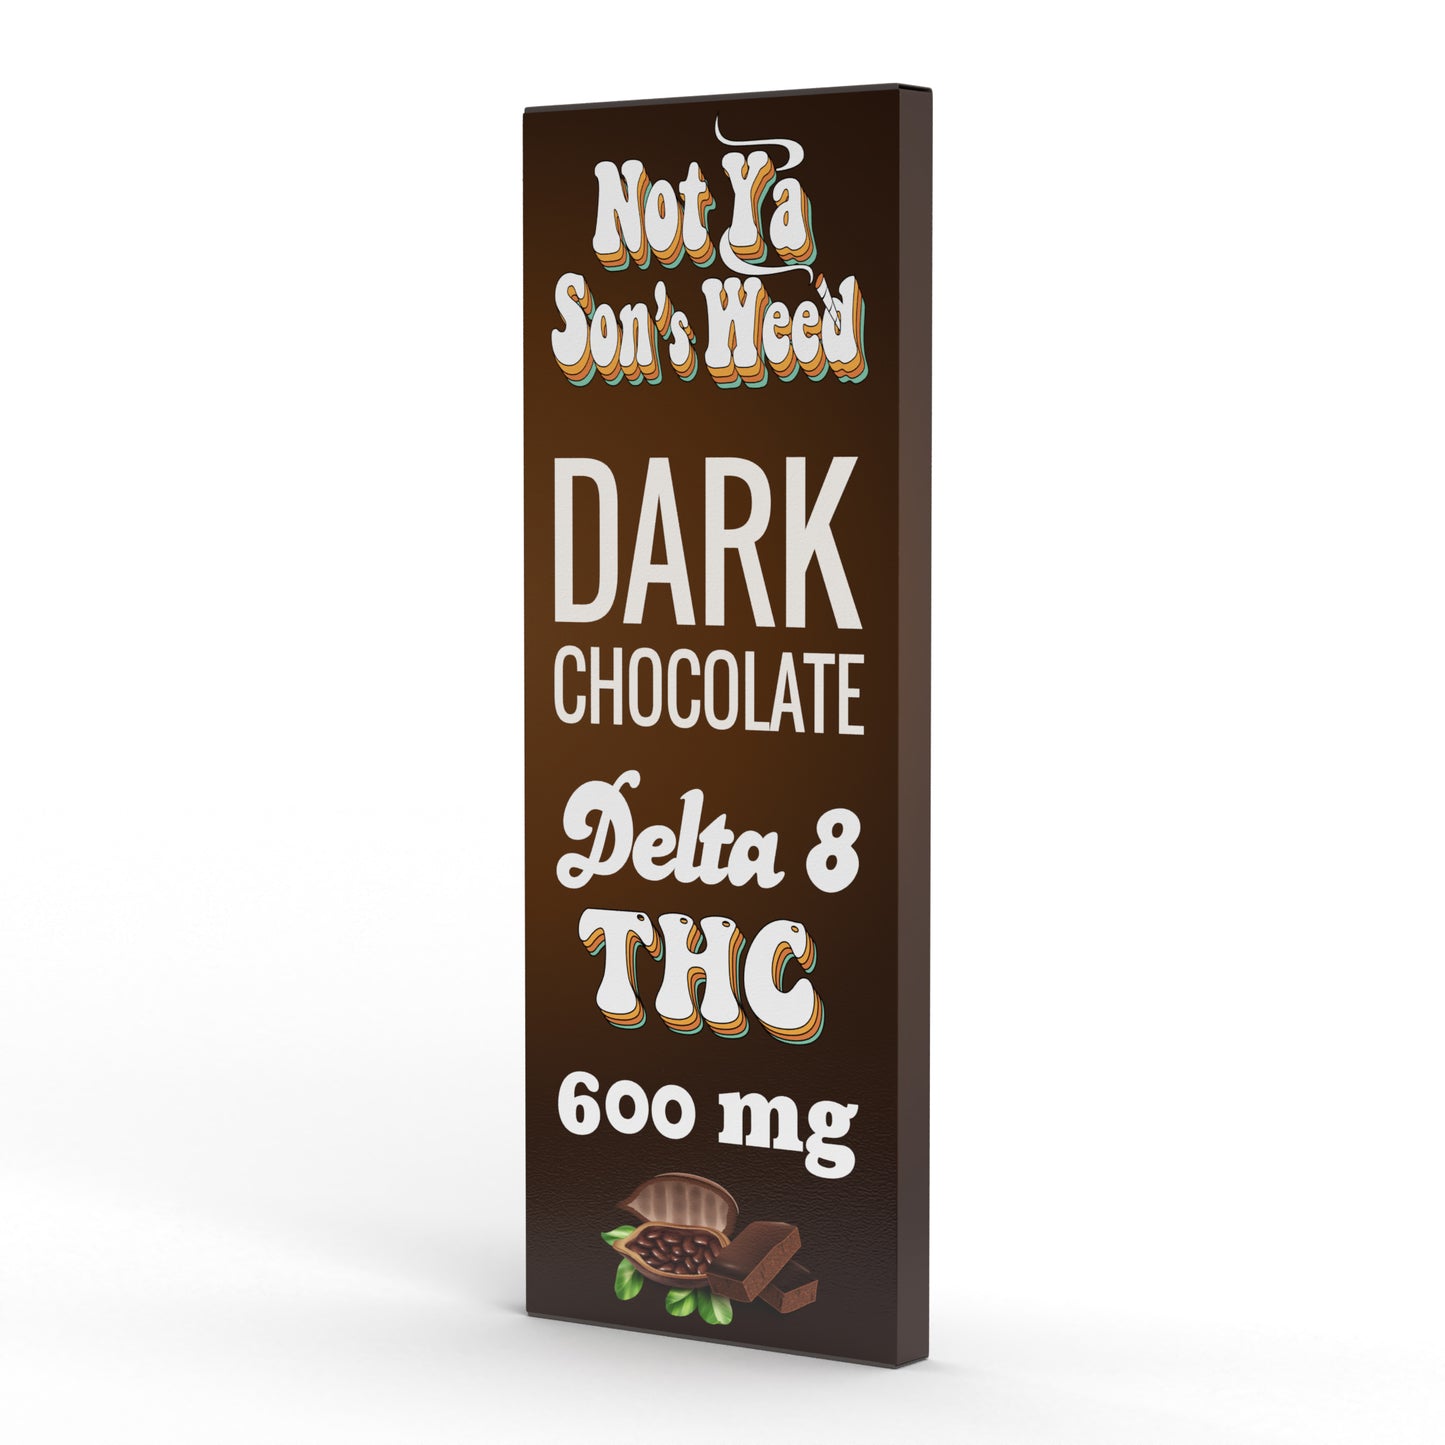 Not Ya Sons Weed Delta 8 600mg Chocolate Bar